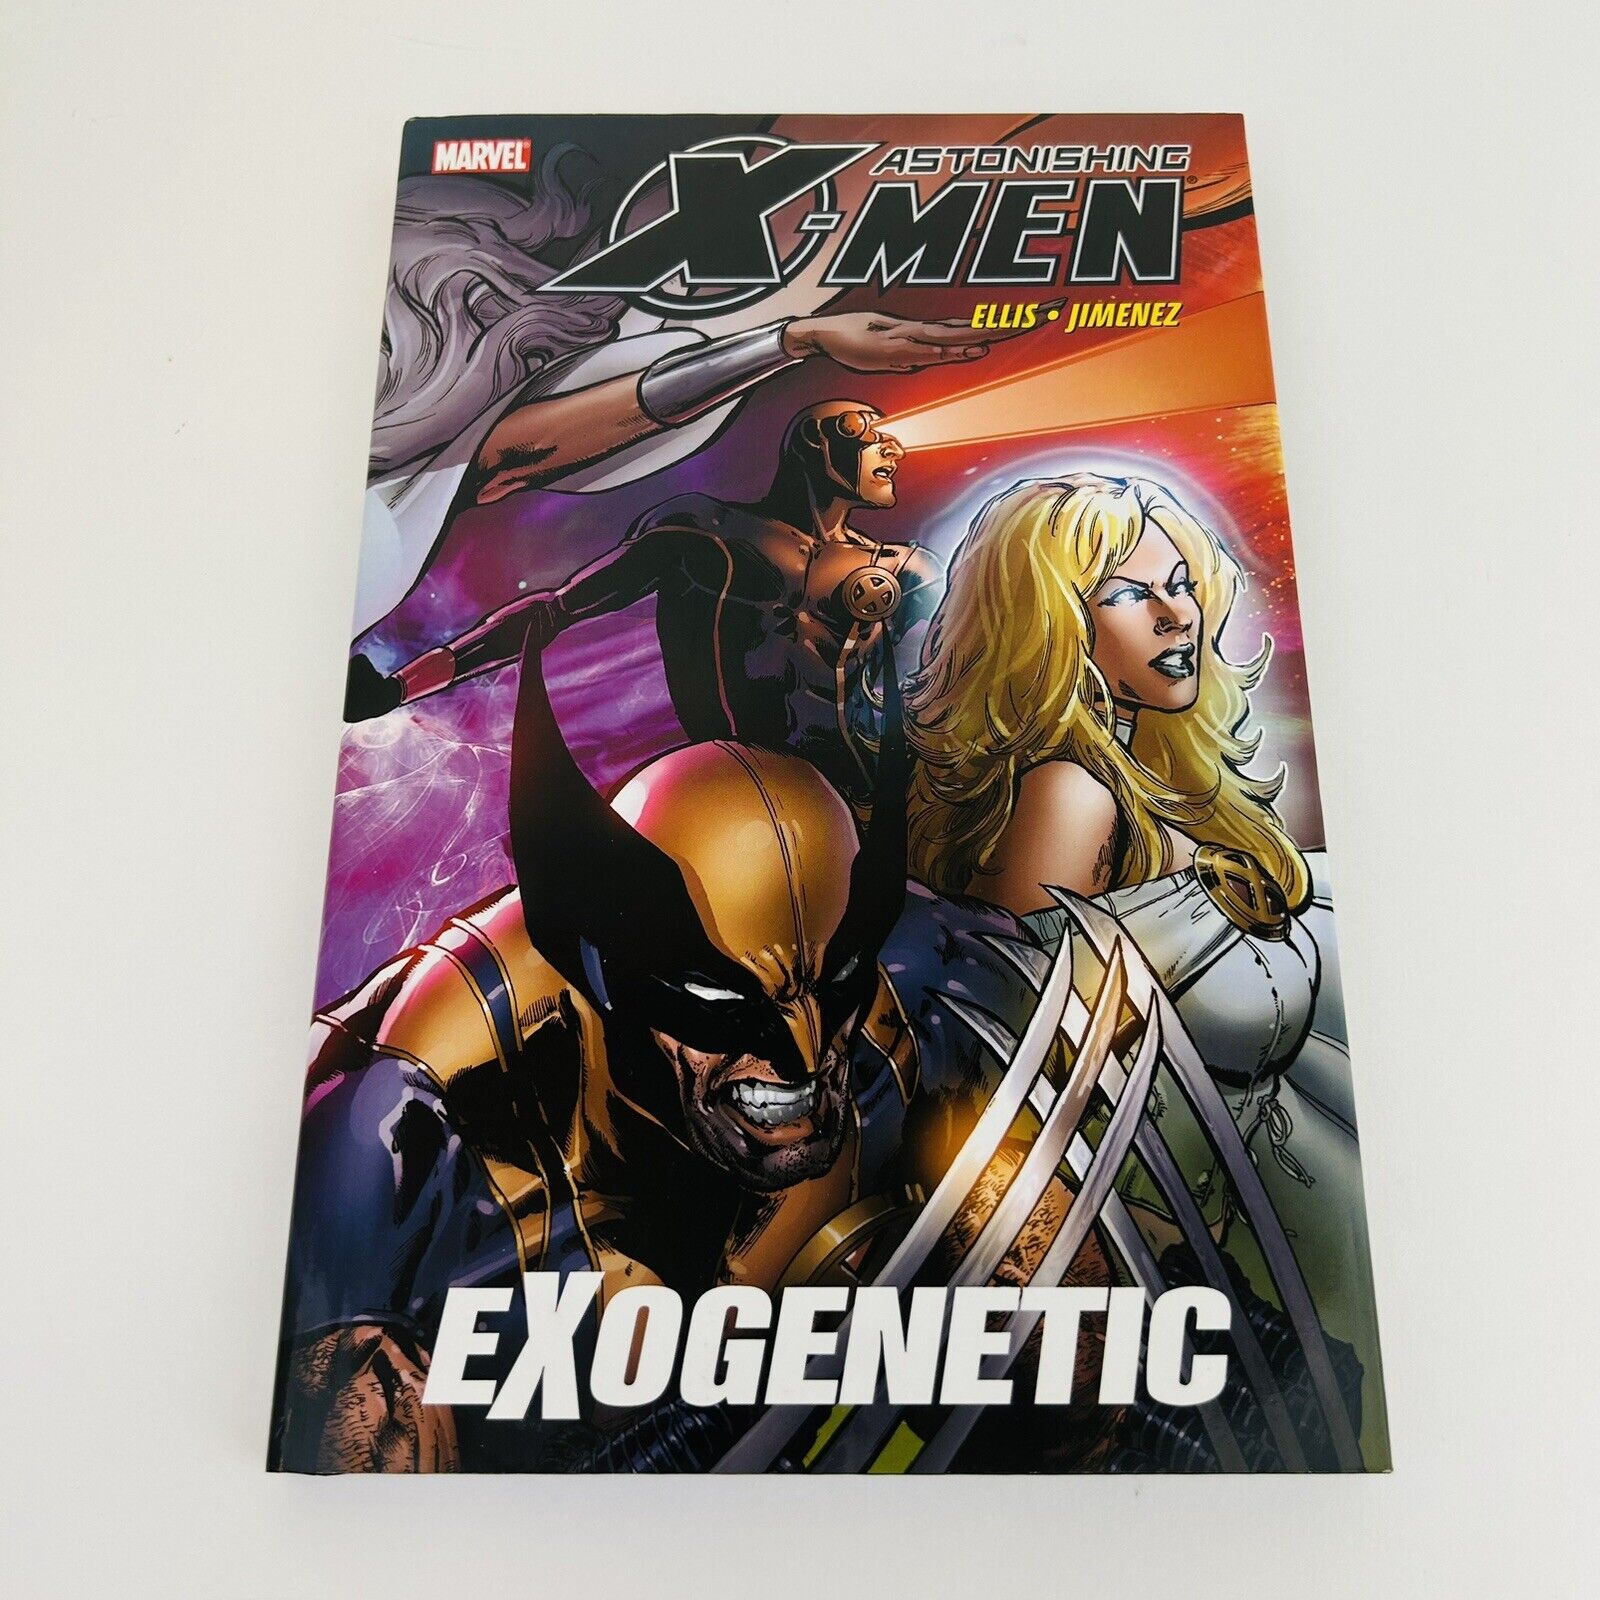 Astonishing X-Men: Exogenetic Vol. 1 (2010, Marvel Hardcover / Dust Jacket)